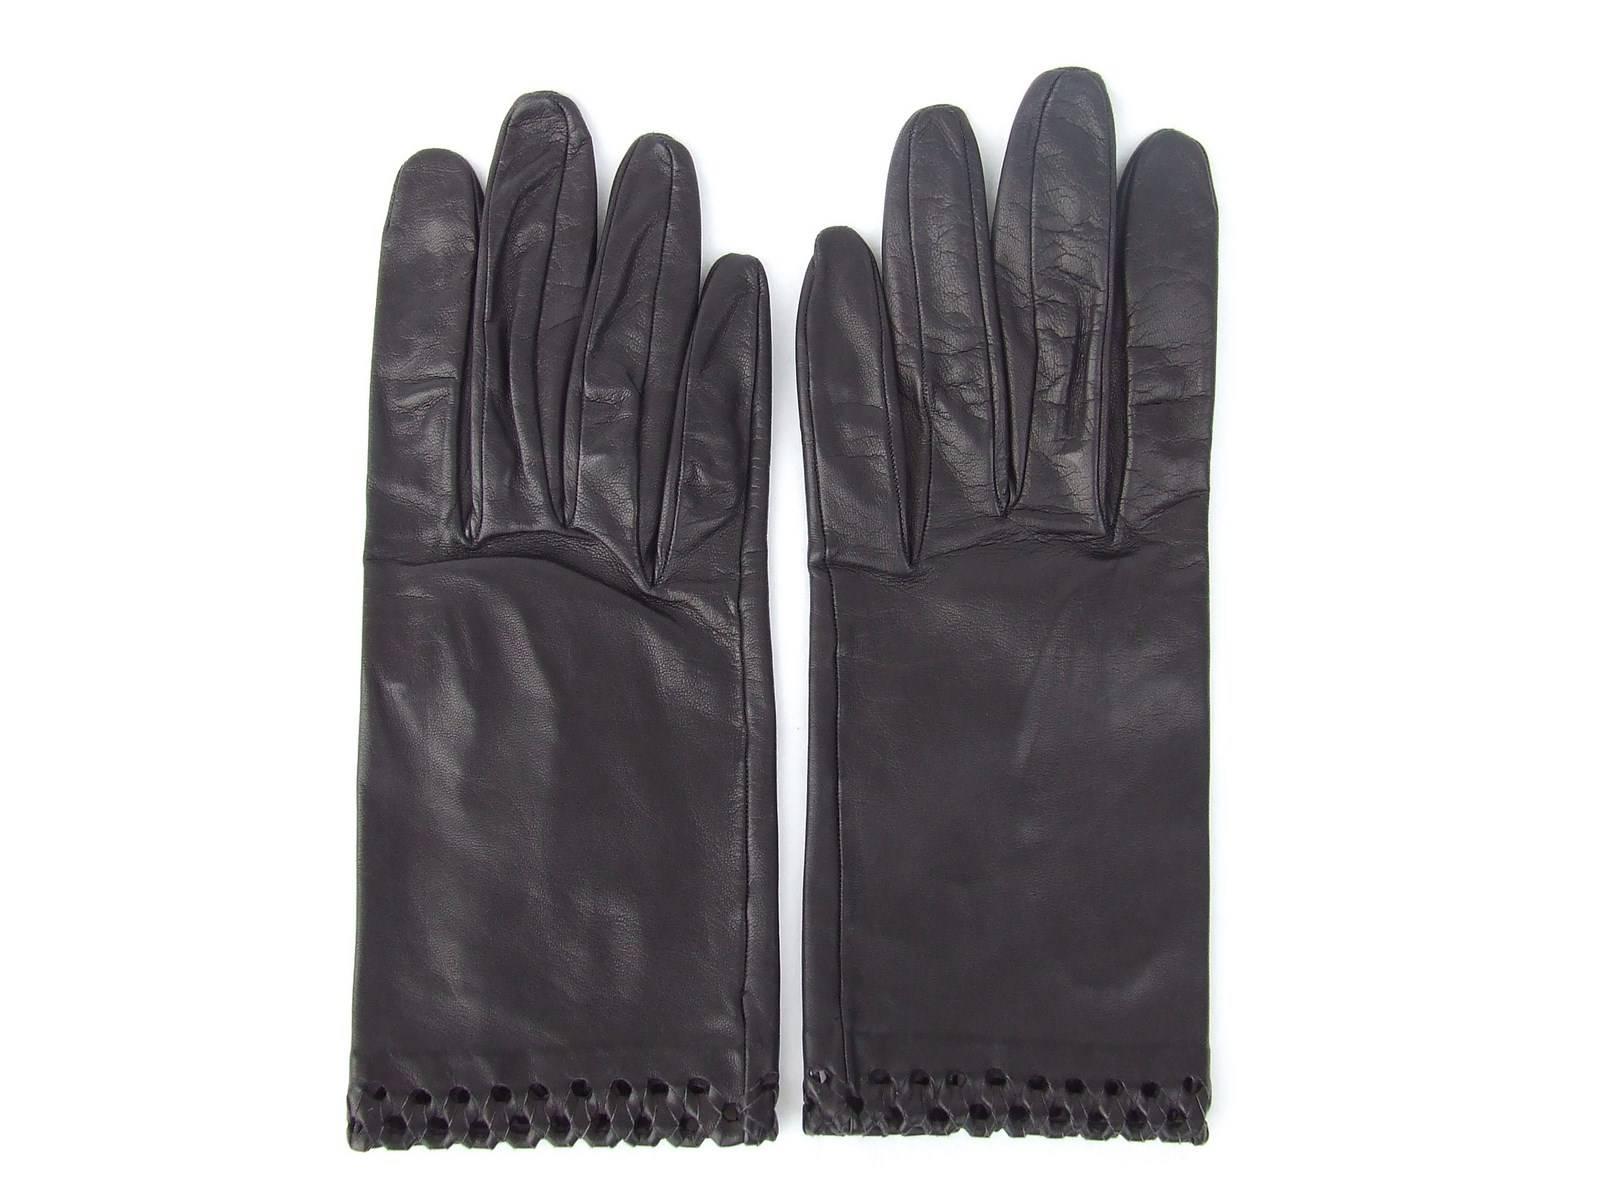 Women's Hermes Women Gloves in Black Leather Size 8 